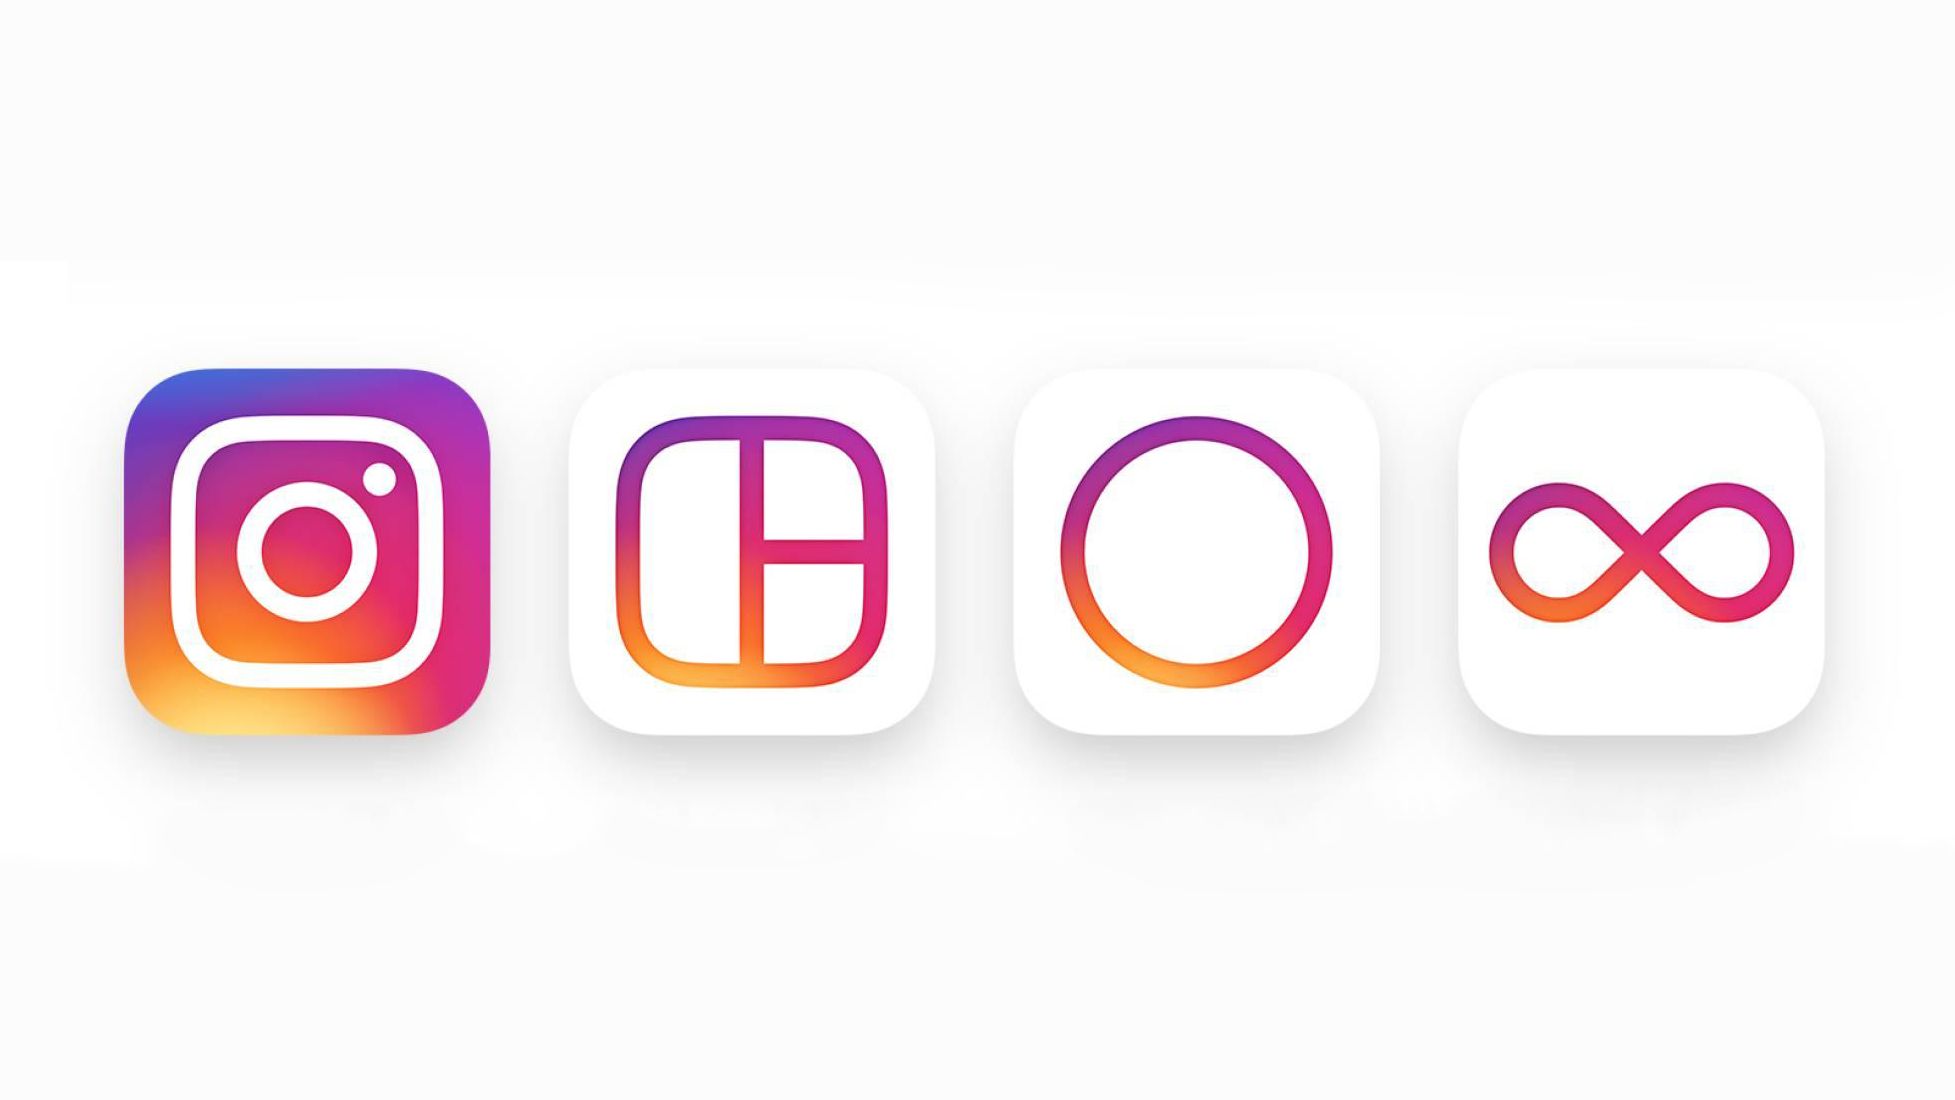 The new Instagram logos